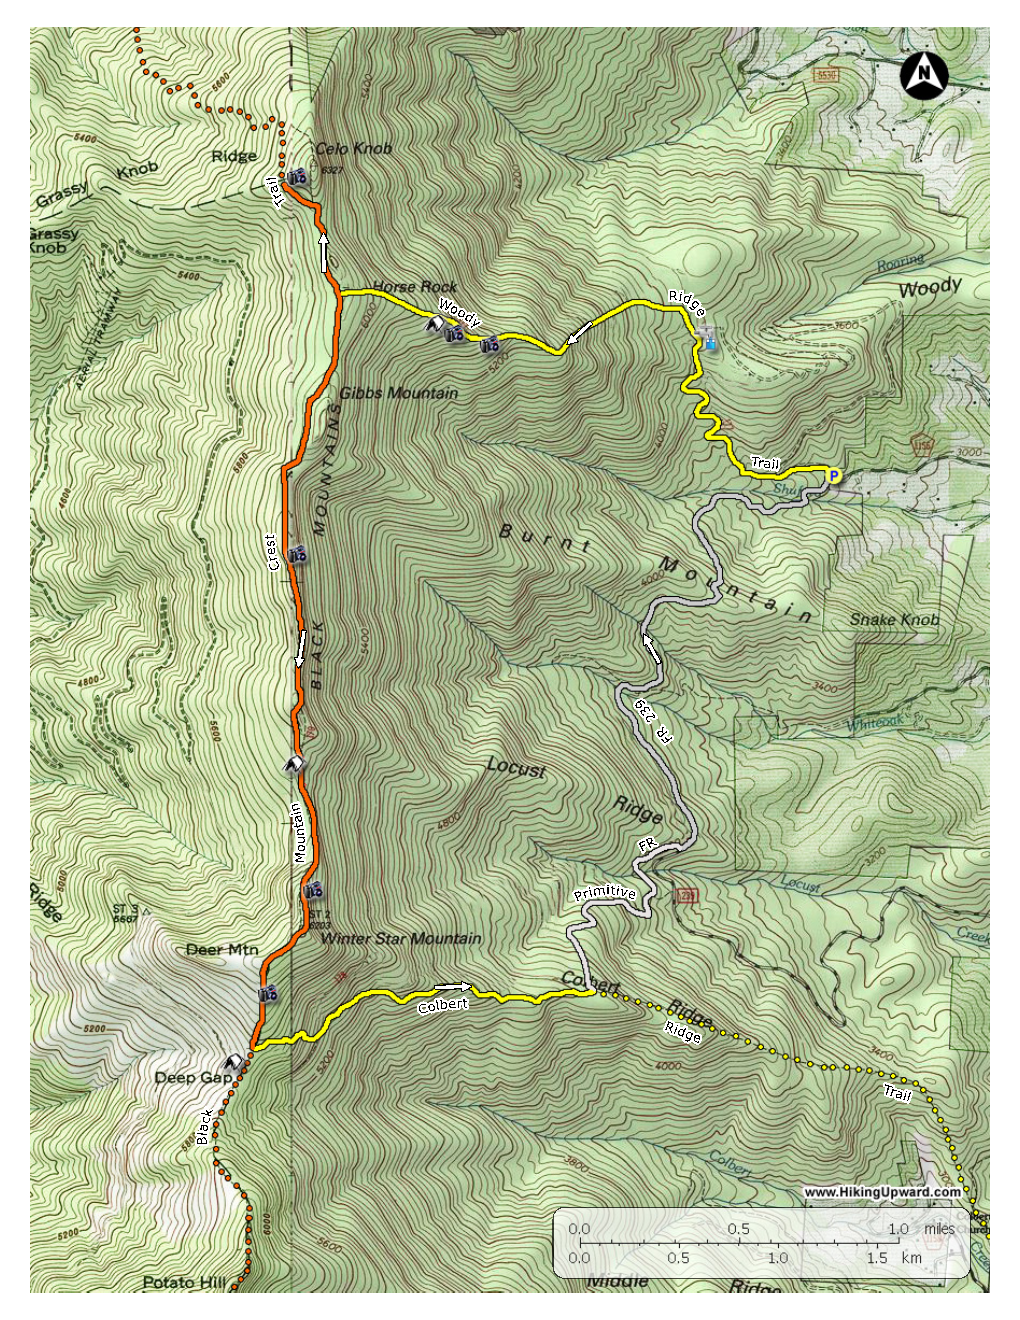 Woody Ridge Trail – Pisgah National Forest, NC